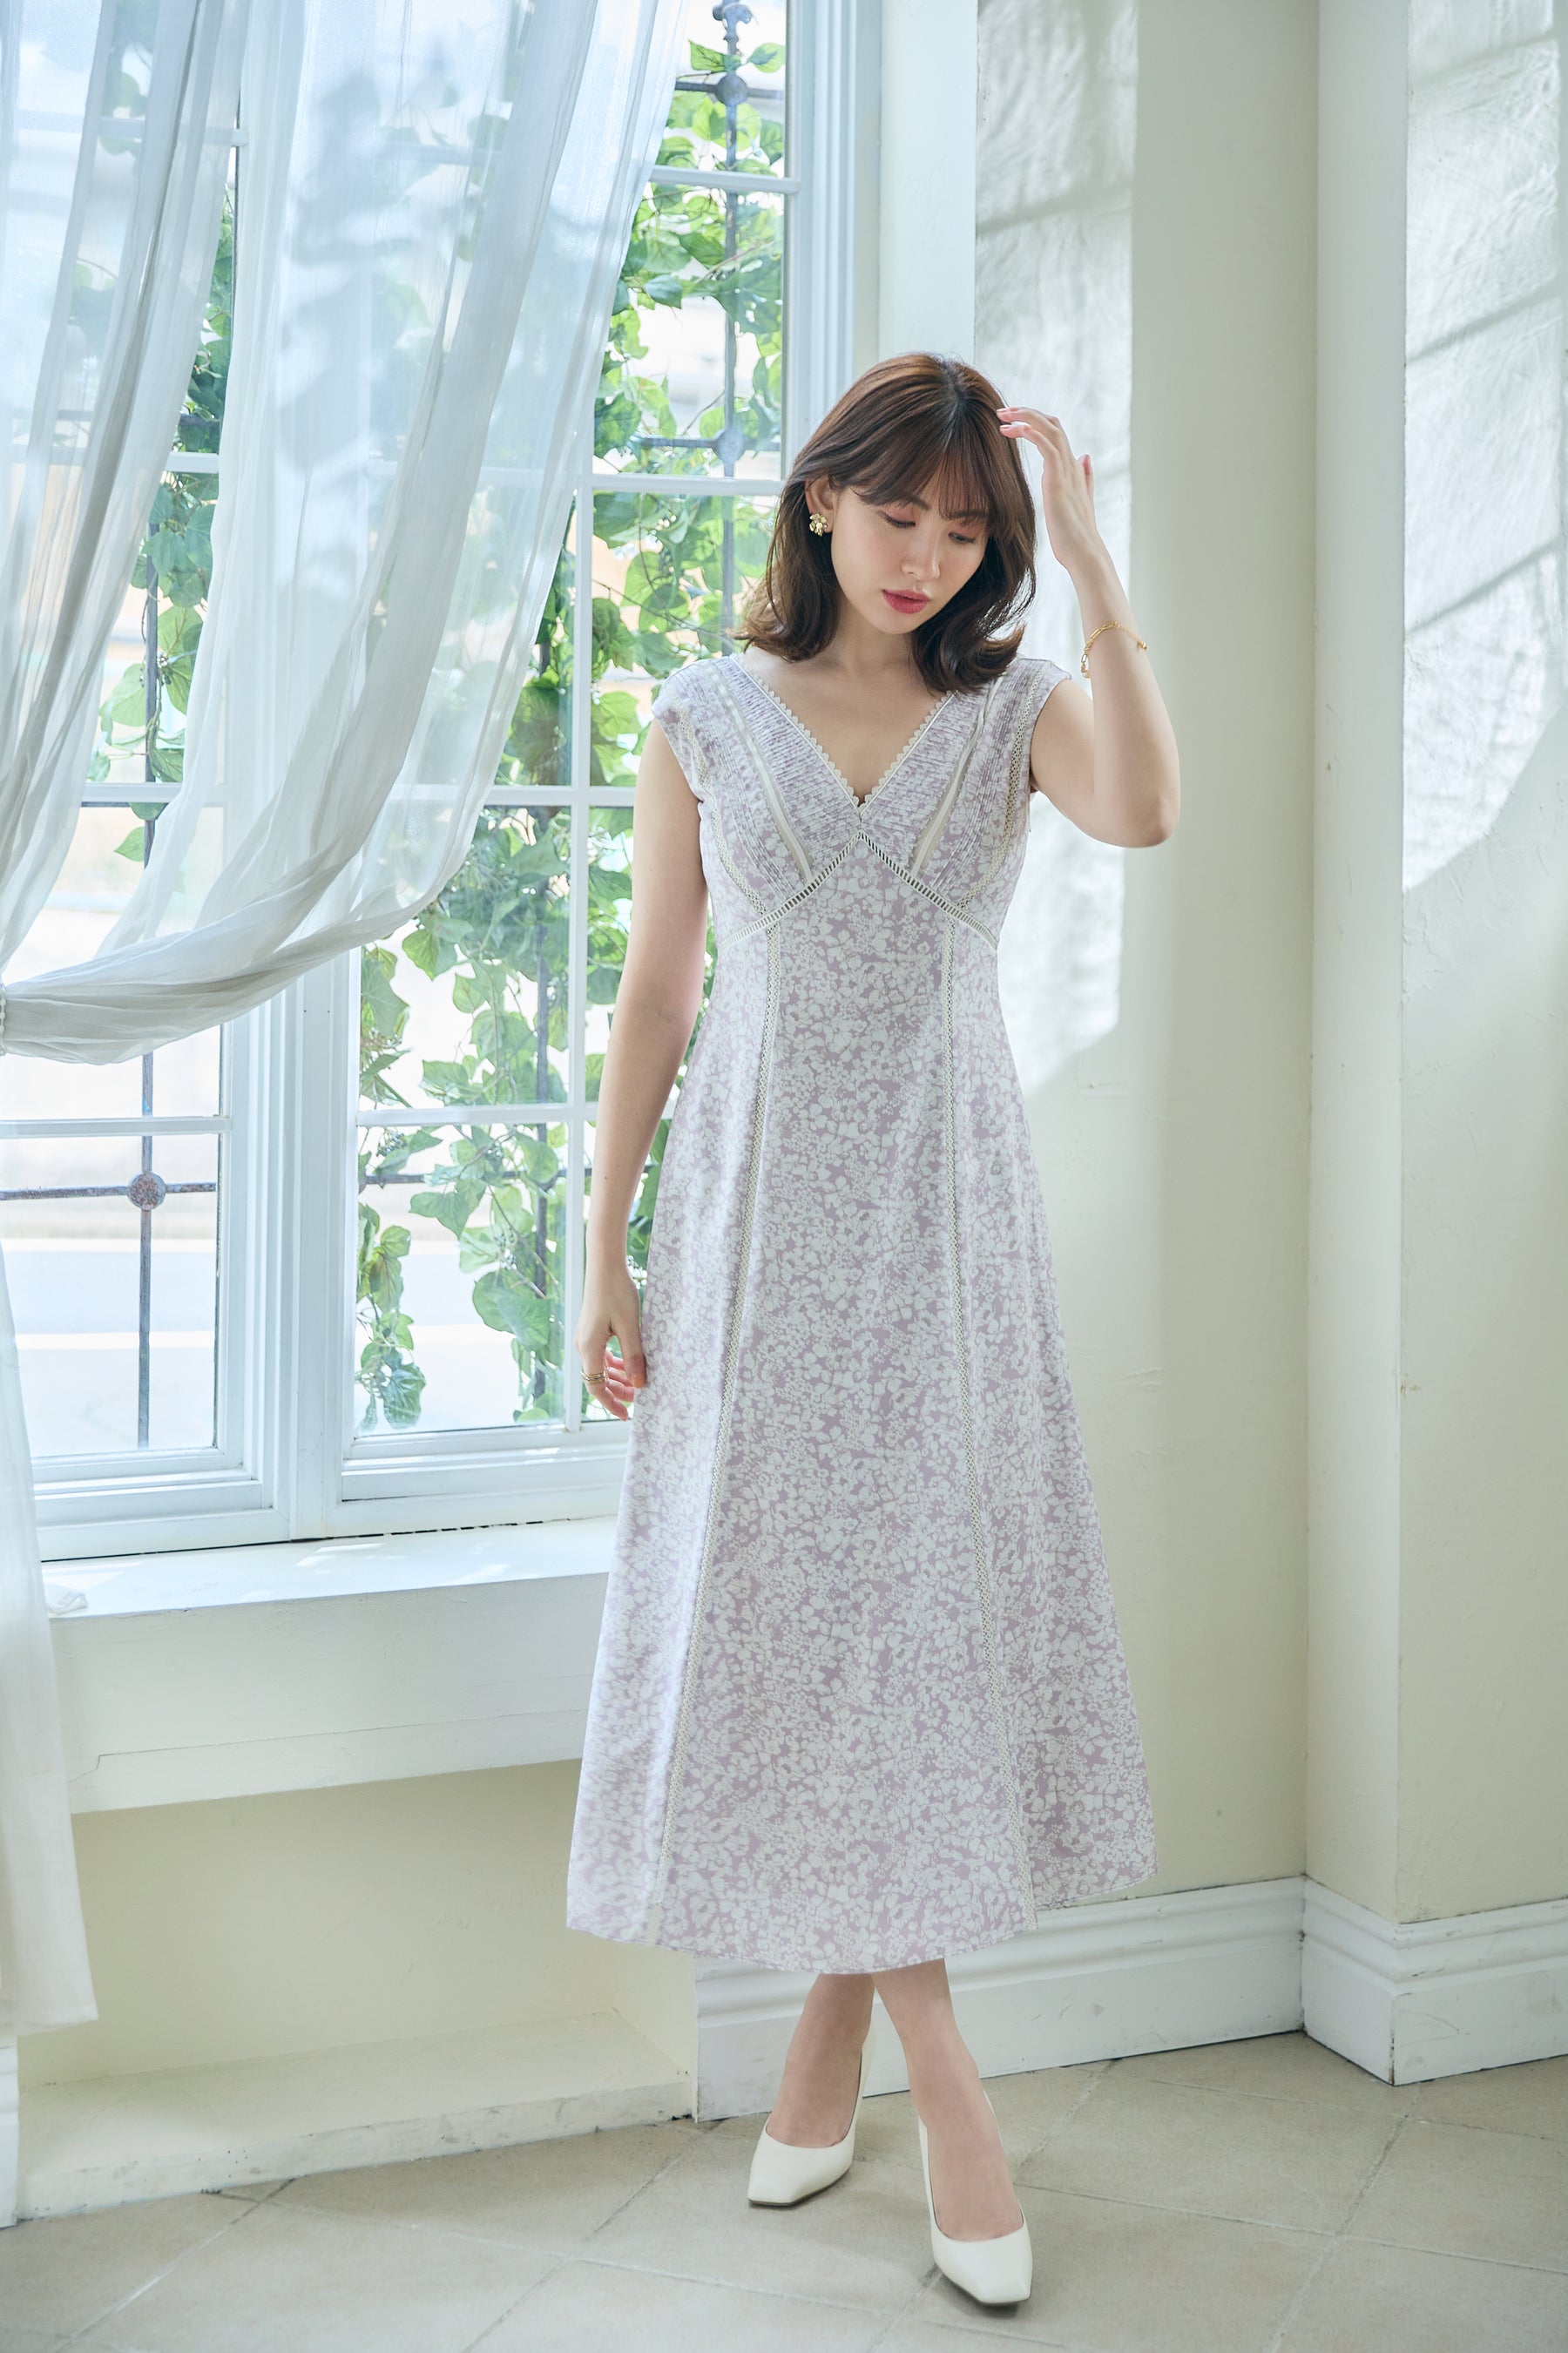 Lace Trimmed Floral Dress